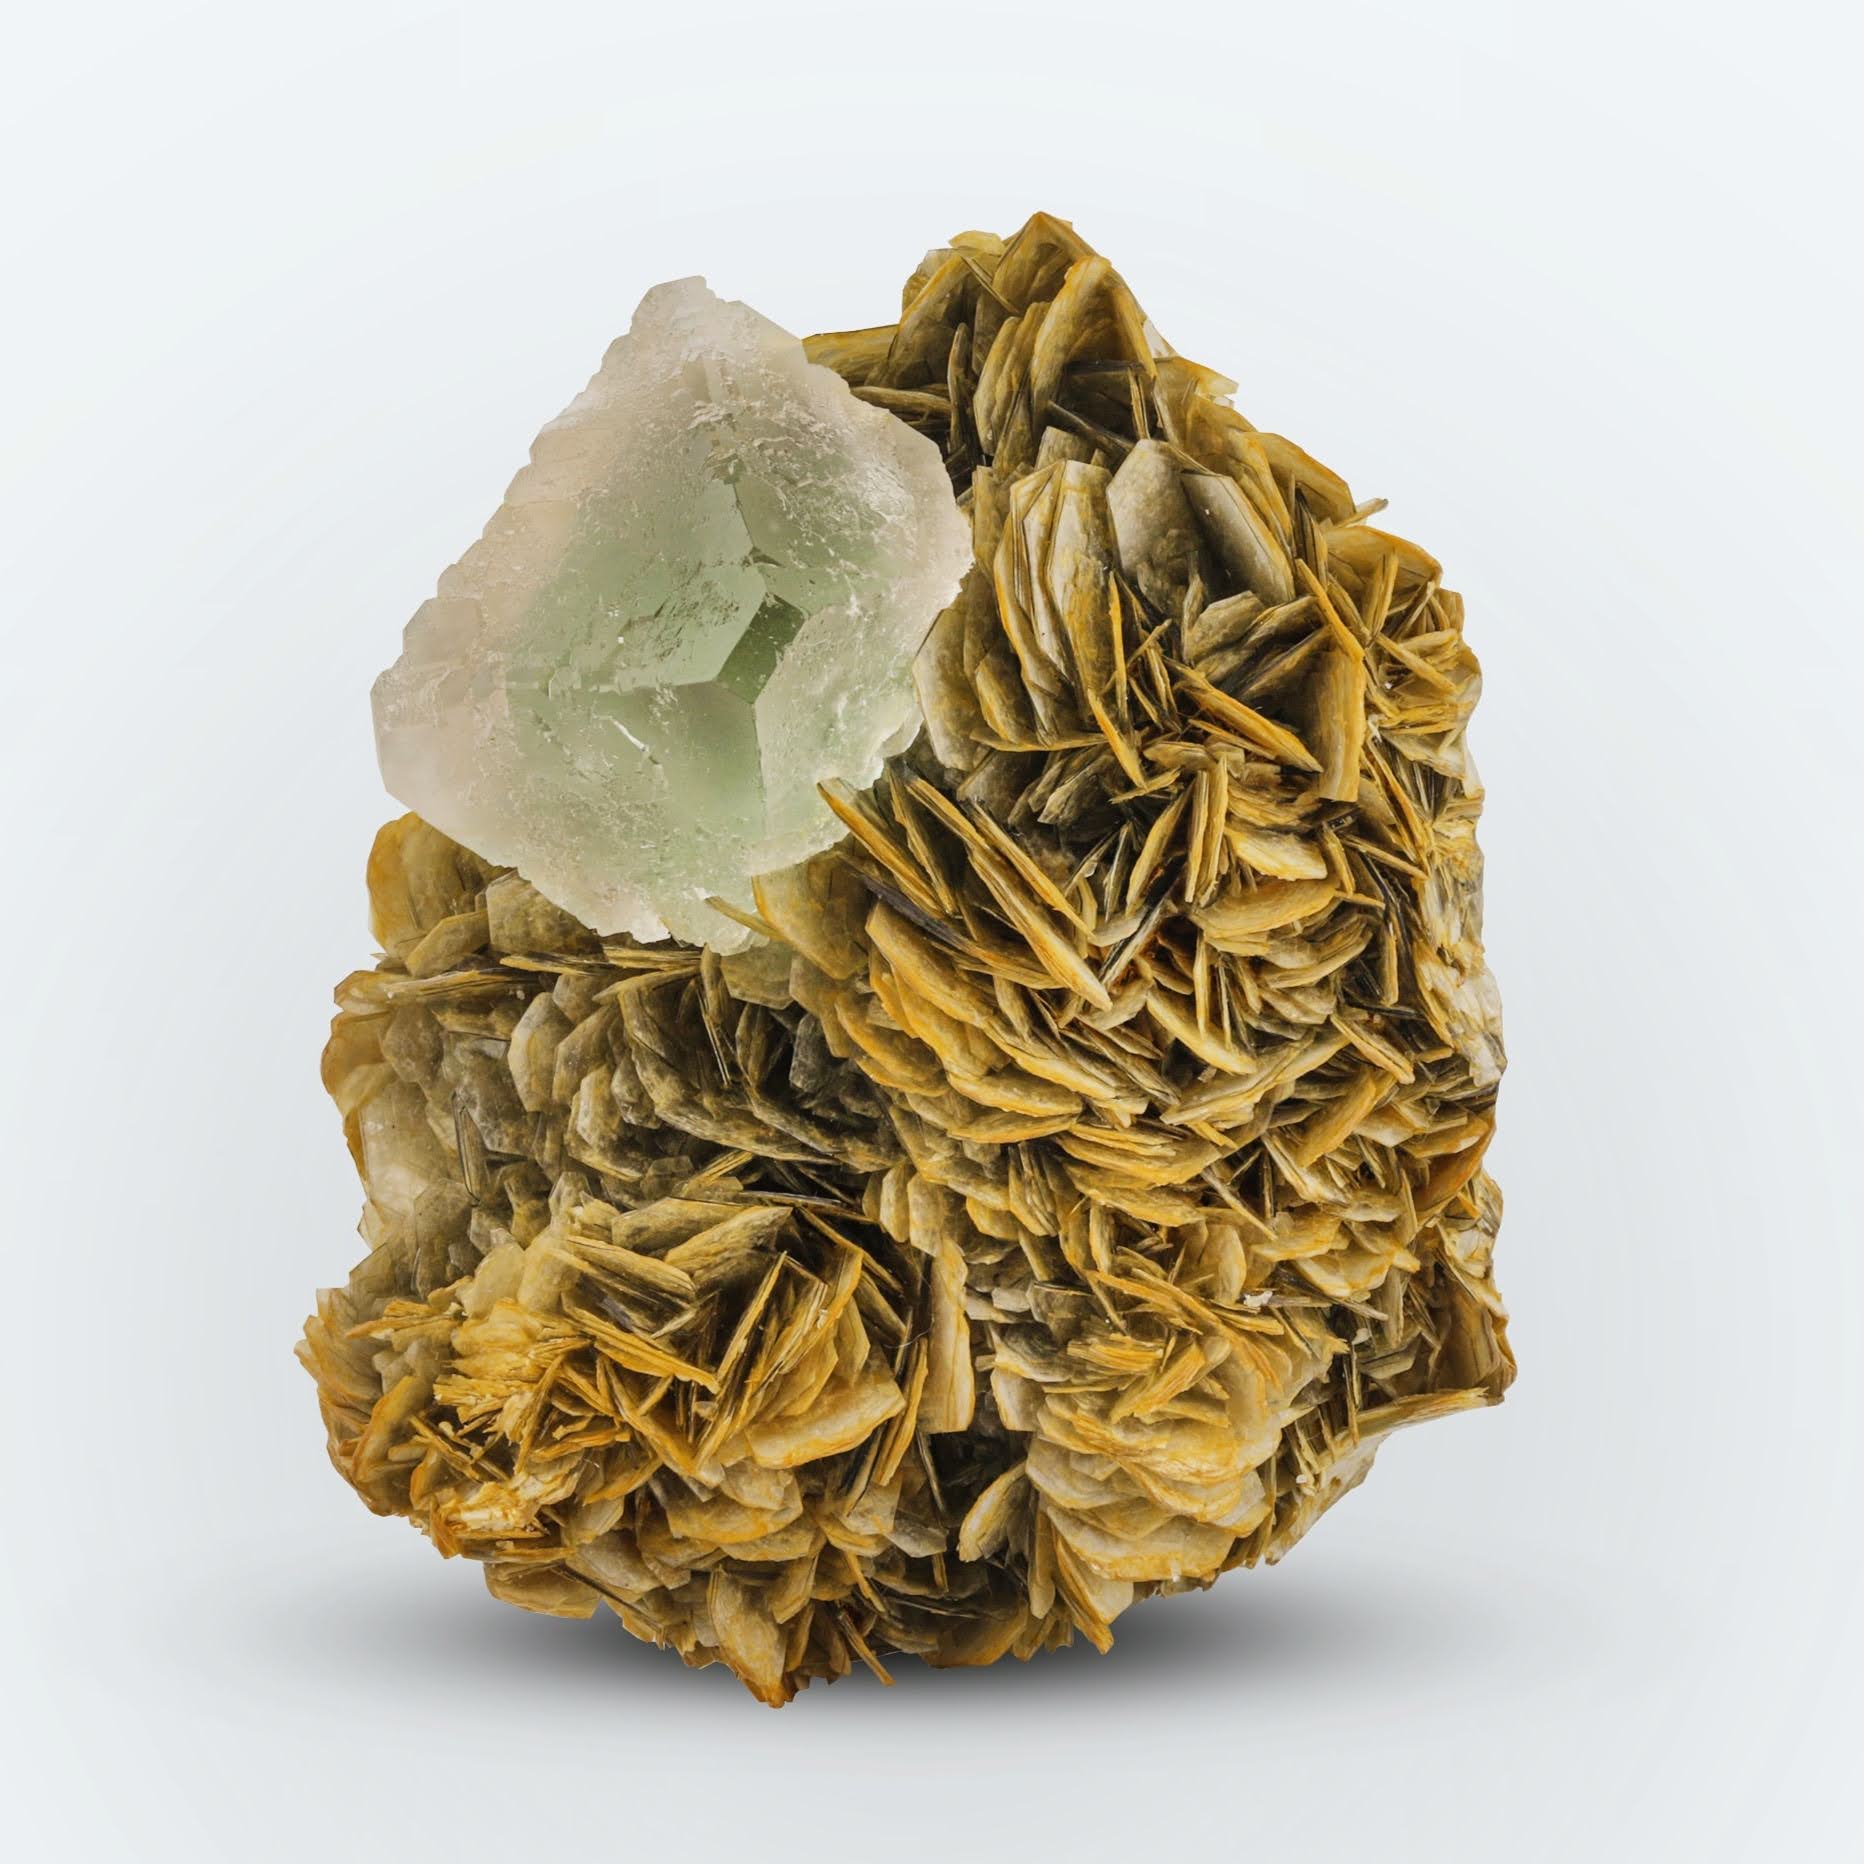 Green Fluorite Crystal on Muscovite